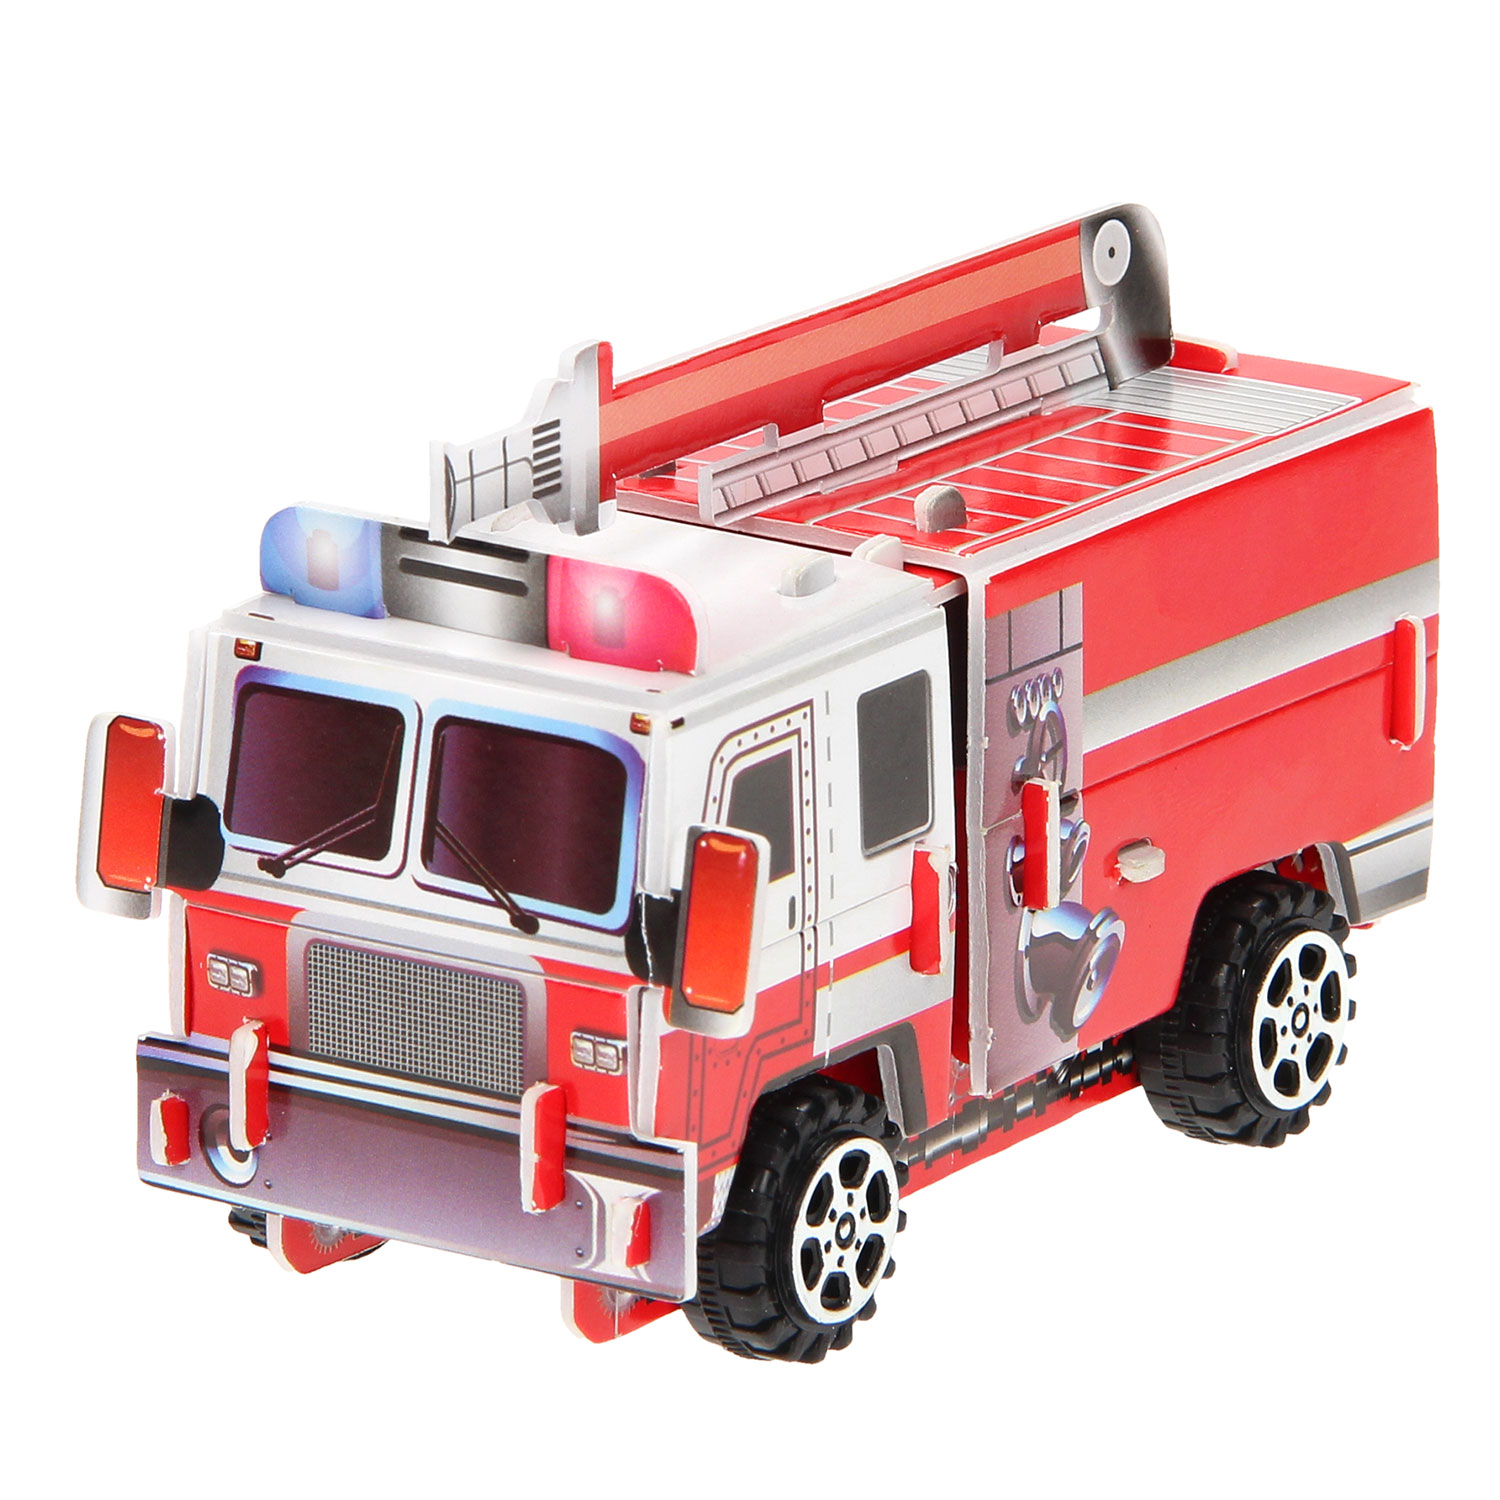 3D-Puzzle Feuerwehrauto